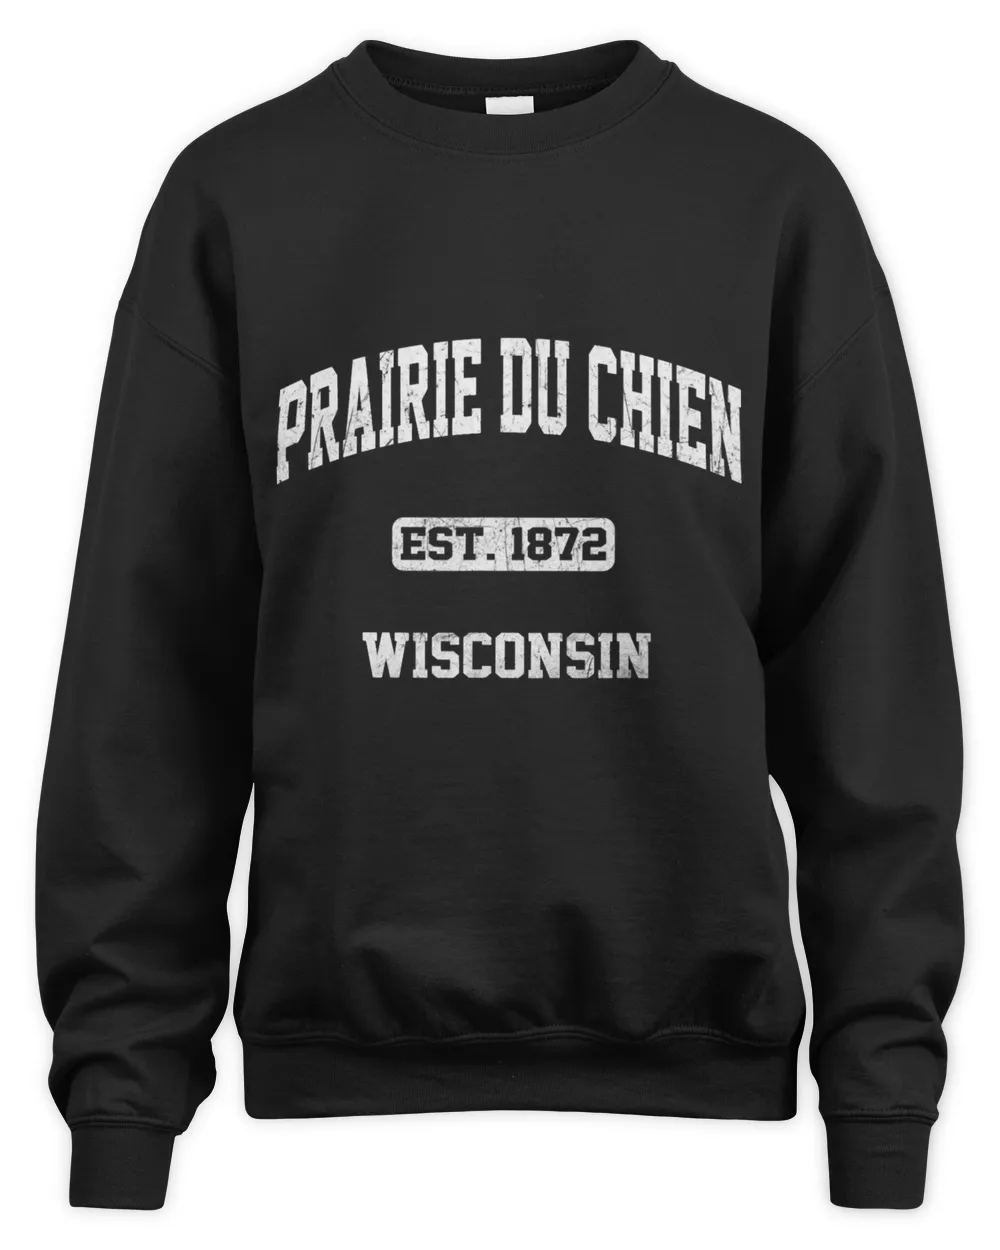 Prairie du Chien Wisconsin WI vintage State Athletic style 3